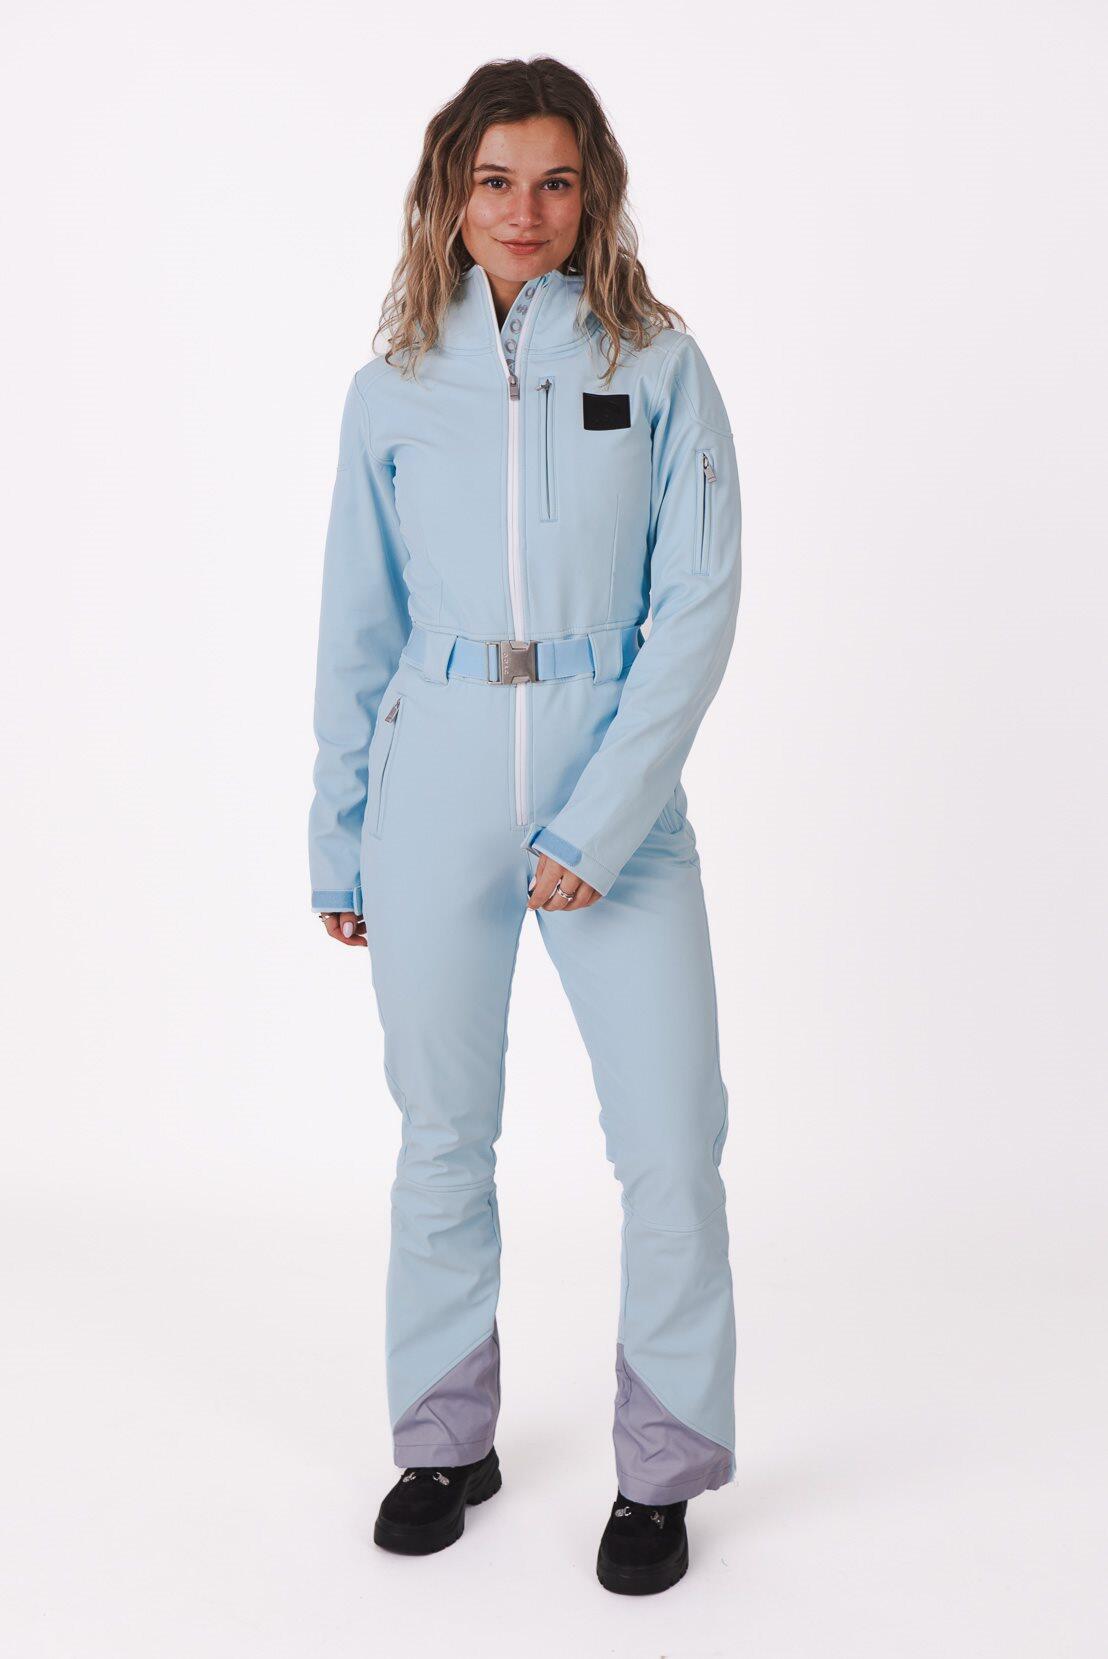 OOSC Ice Blue Chic Ski Suit